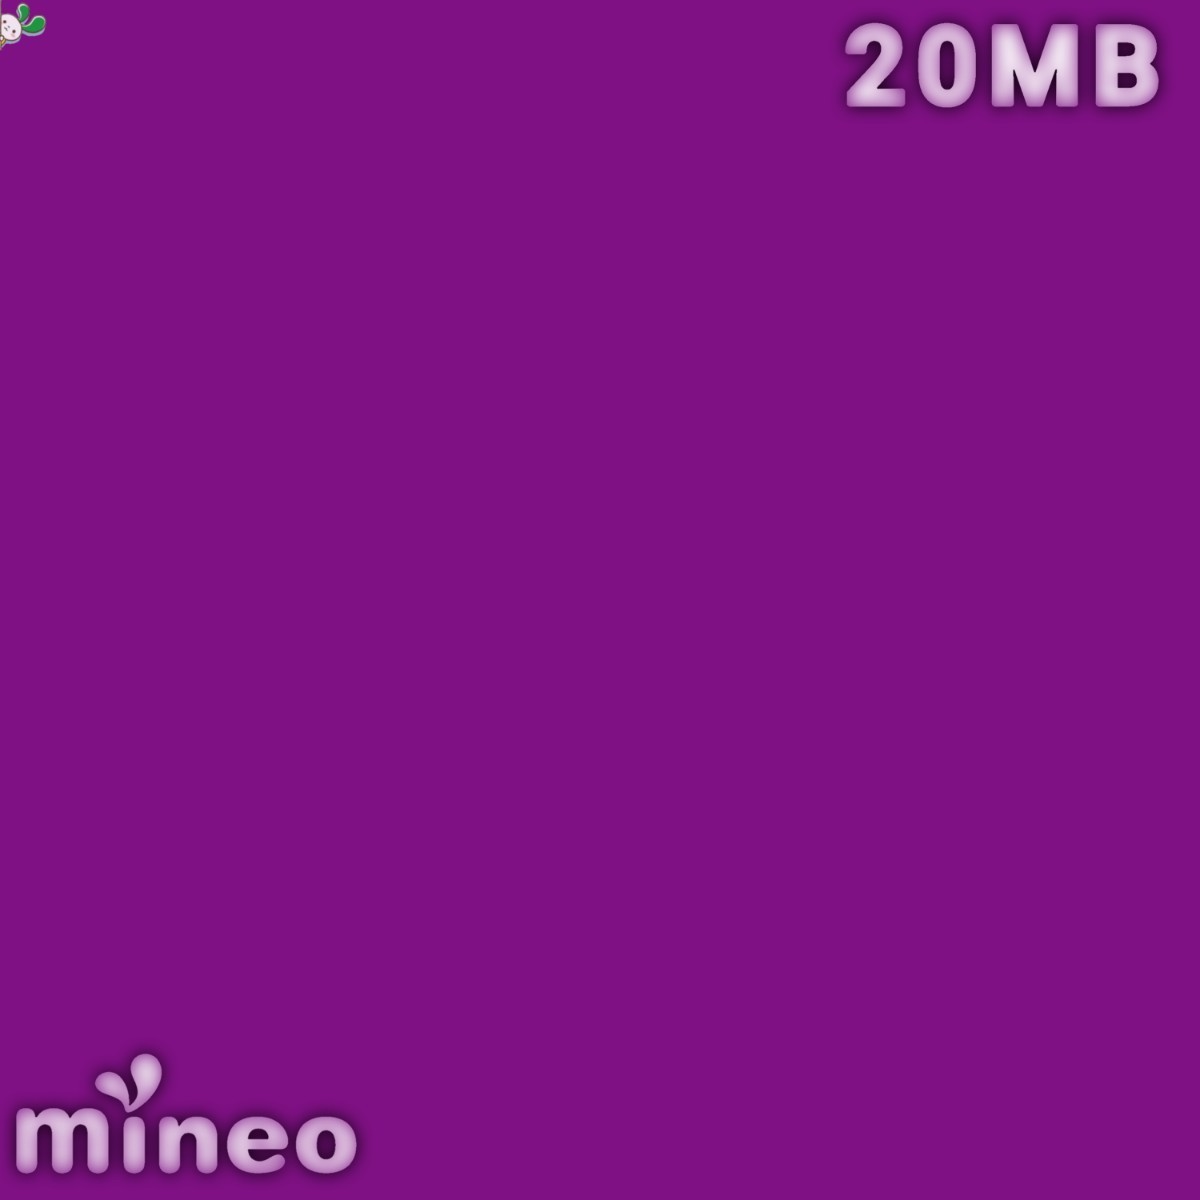 “mineo”『マイネオ パケットギフト 20MB』匿名 即決 送料無料 折り返し評価 リピOK 制限OFF『Royal Purple』画像データ HEX[#7f1184]/Ⅰ_画像1